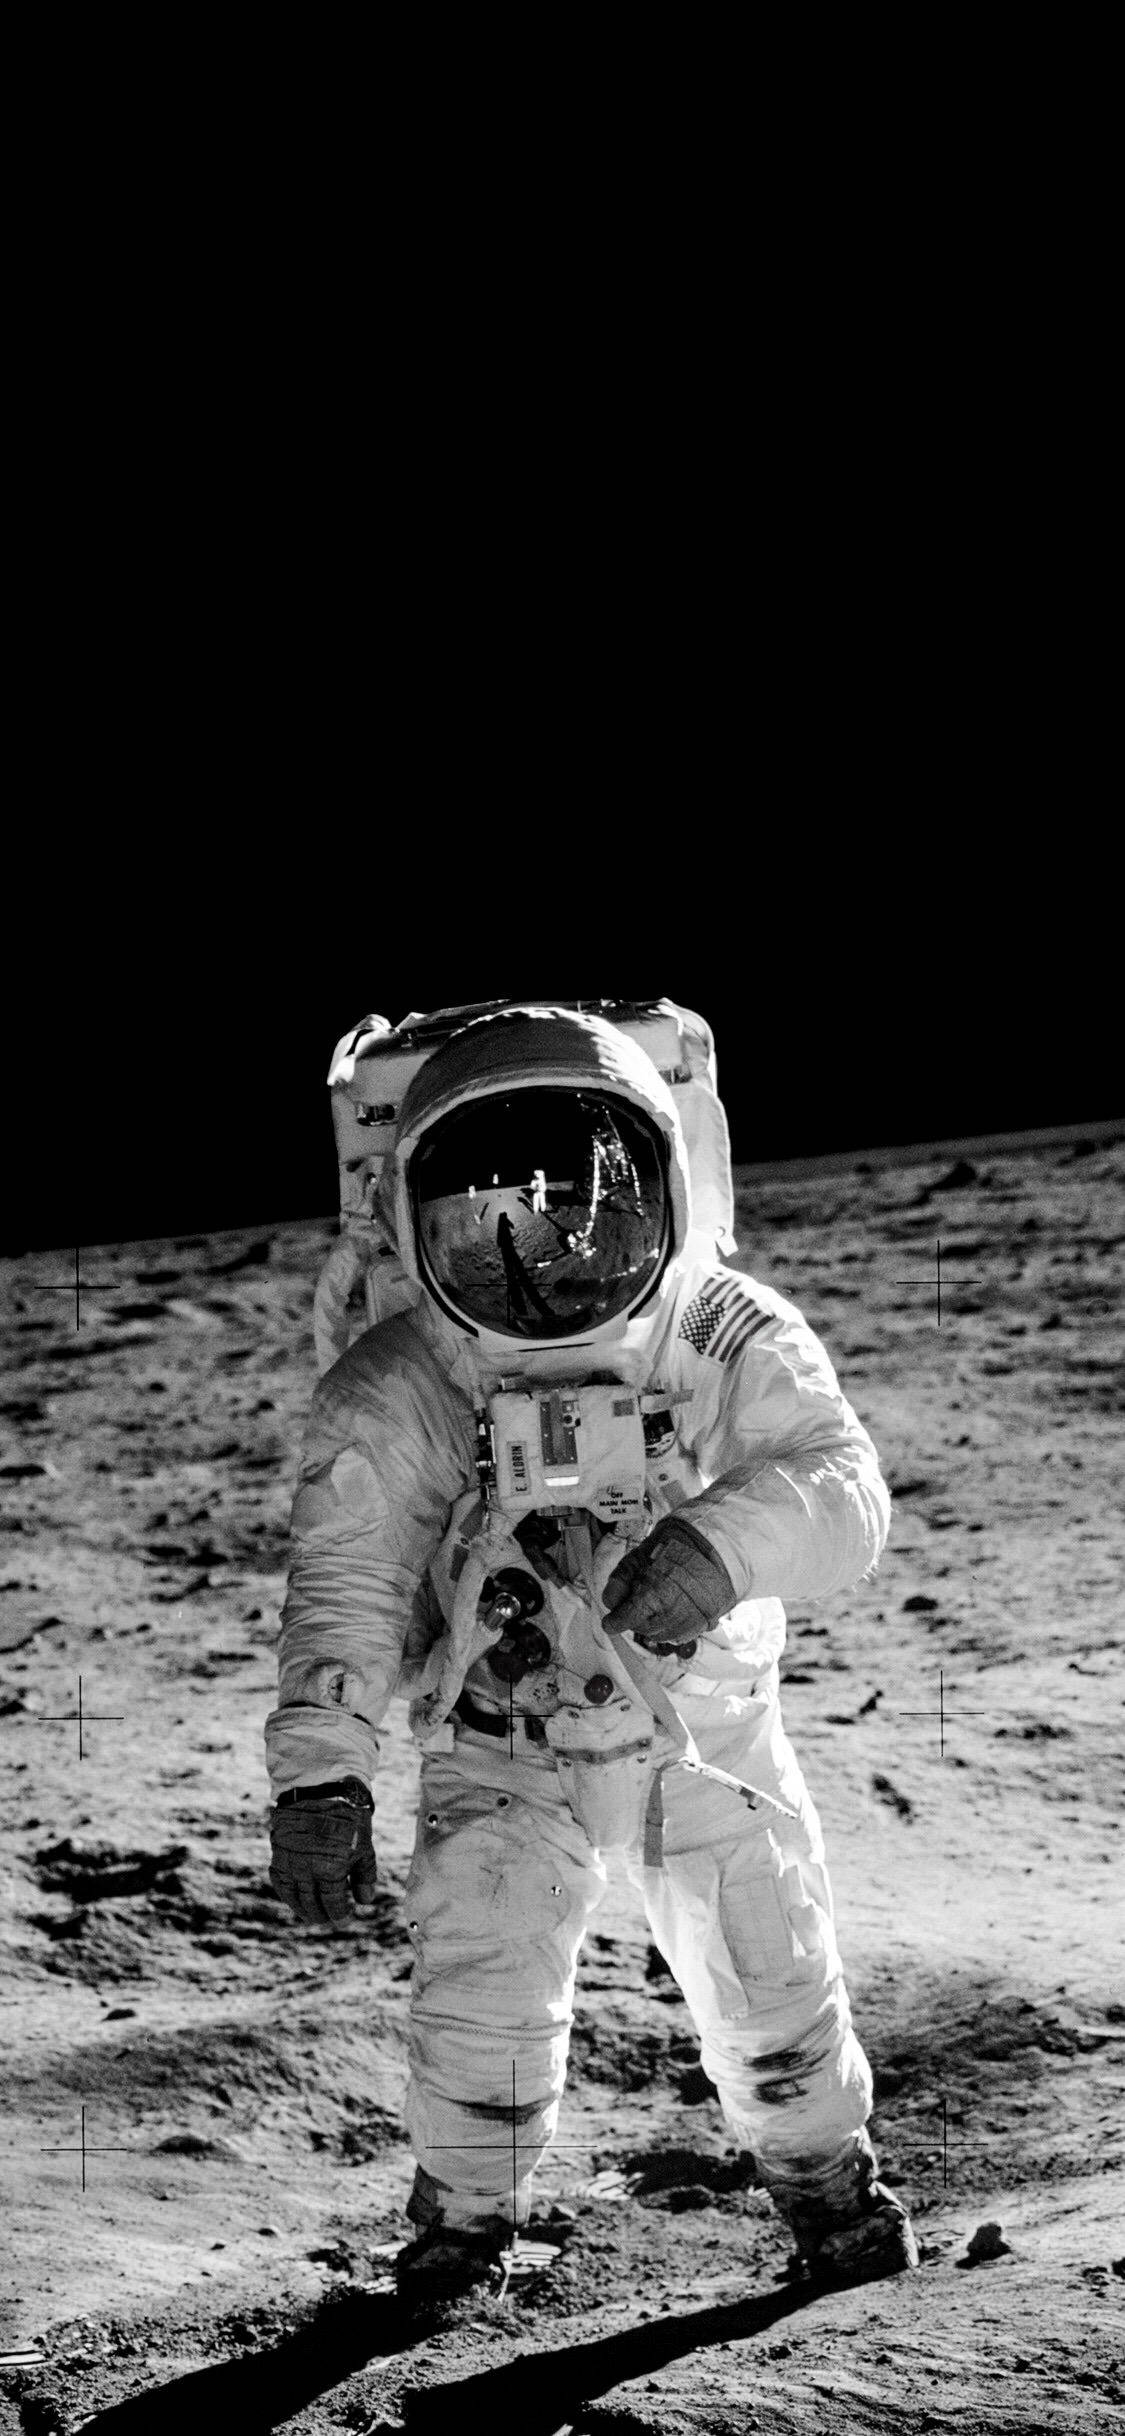 Download Astronaut First Man On Moon Landing Iphone Wallpaper | Wallpapers .com